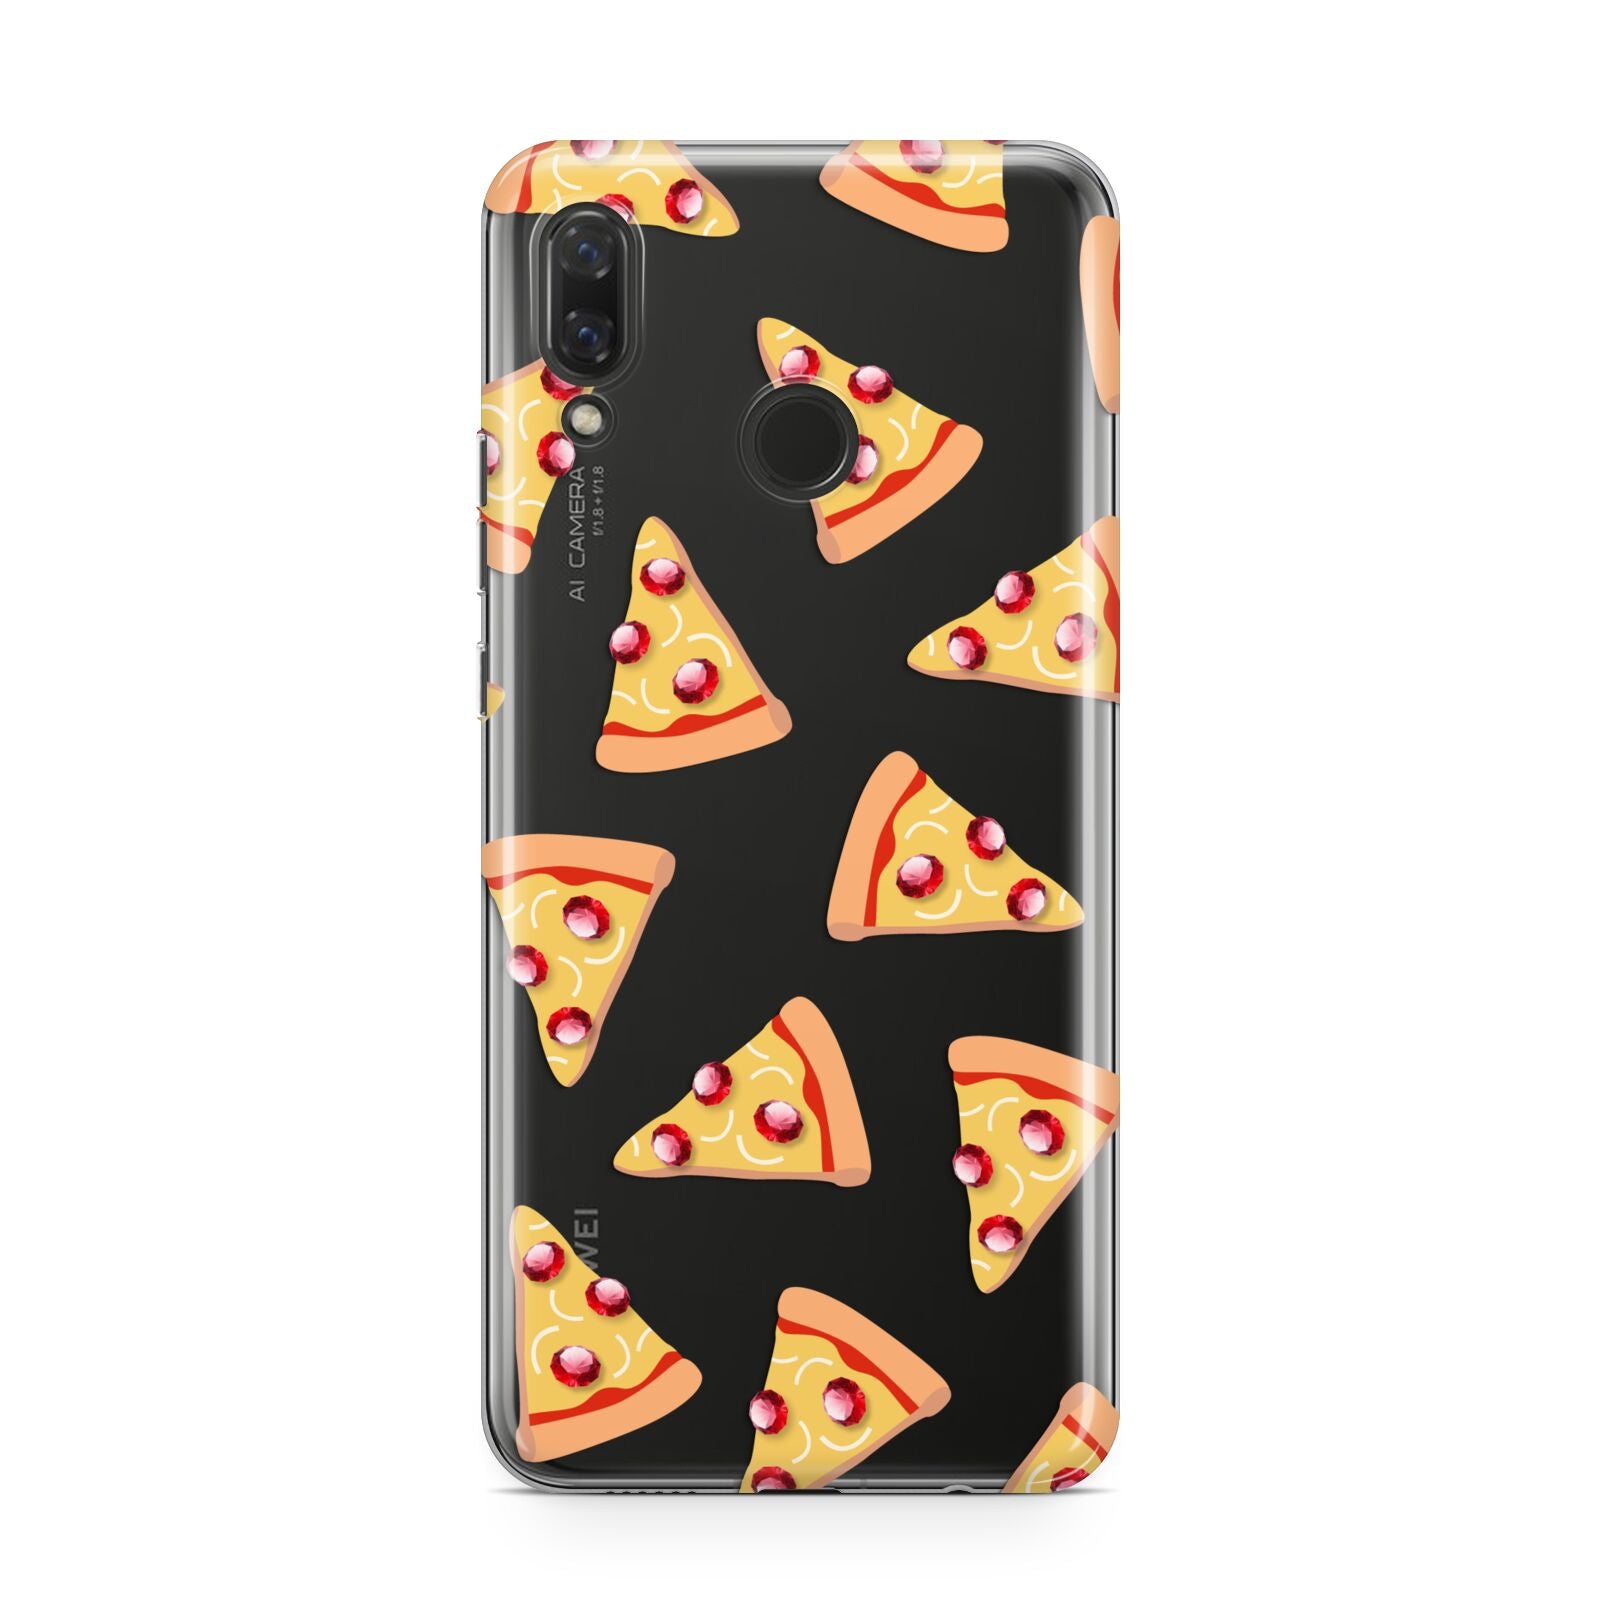 Rubies on Cartoon Pizza Slices Huawei Nova 3 Phone Case